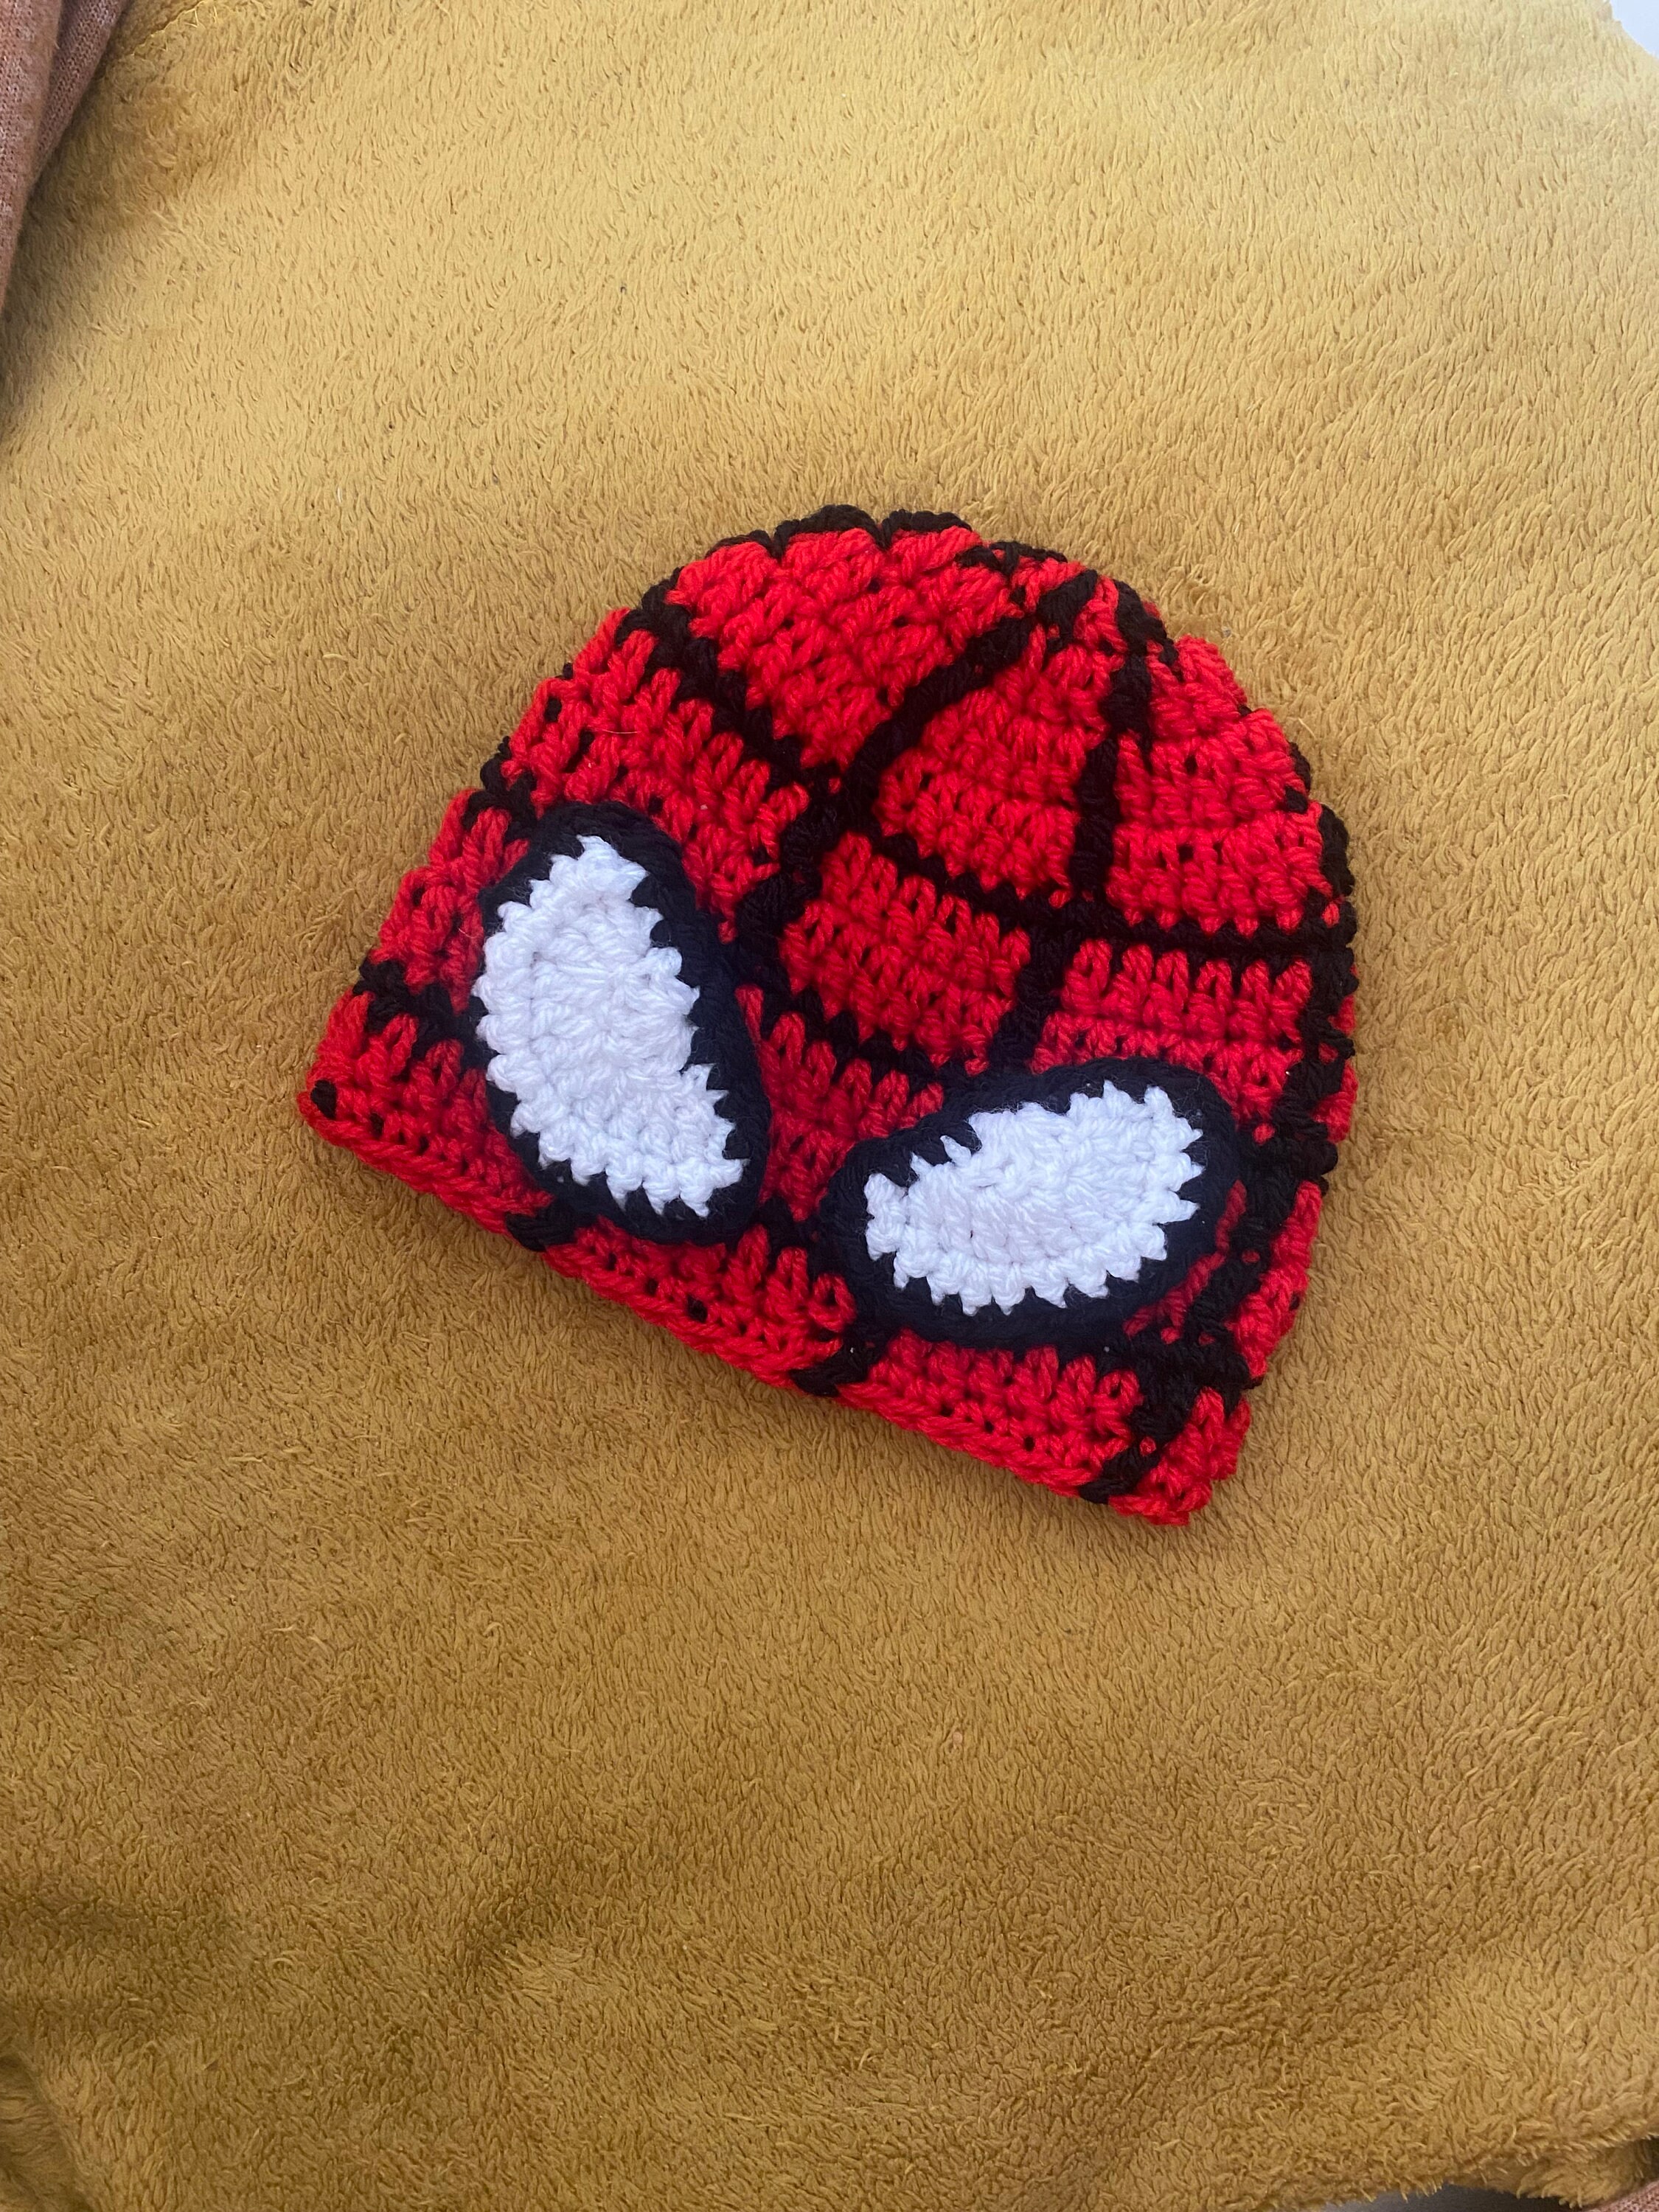 Precommande Marvel bonnet de ski Spider-Man Spidey Laplander